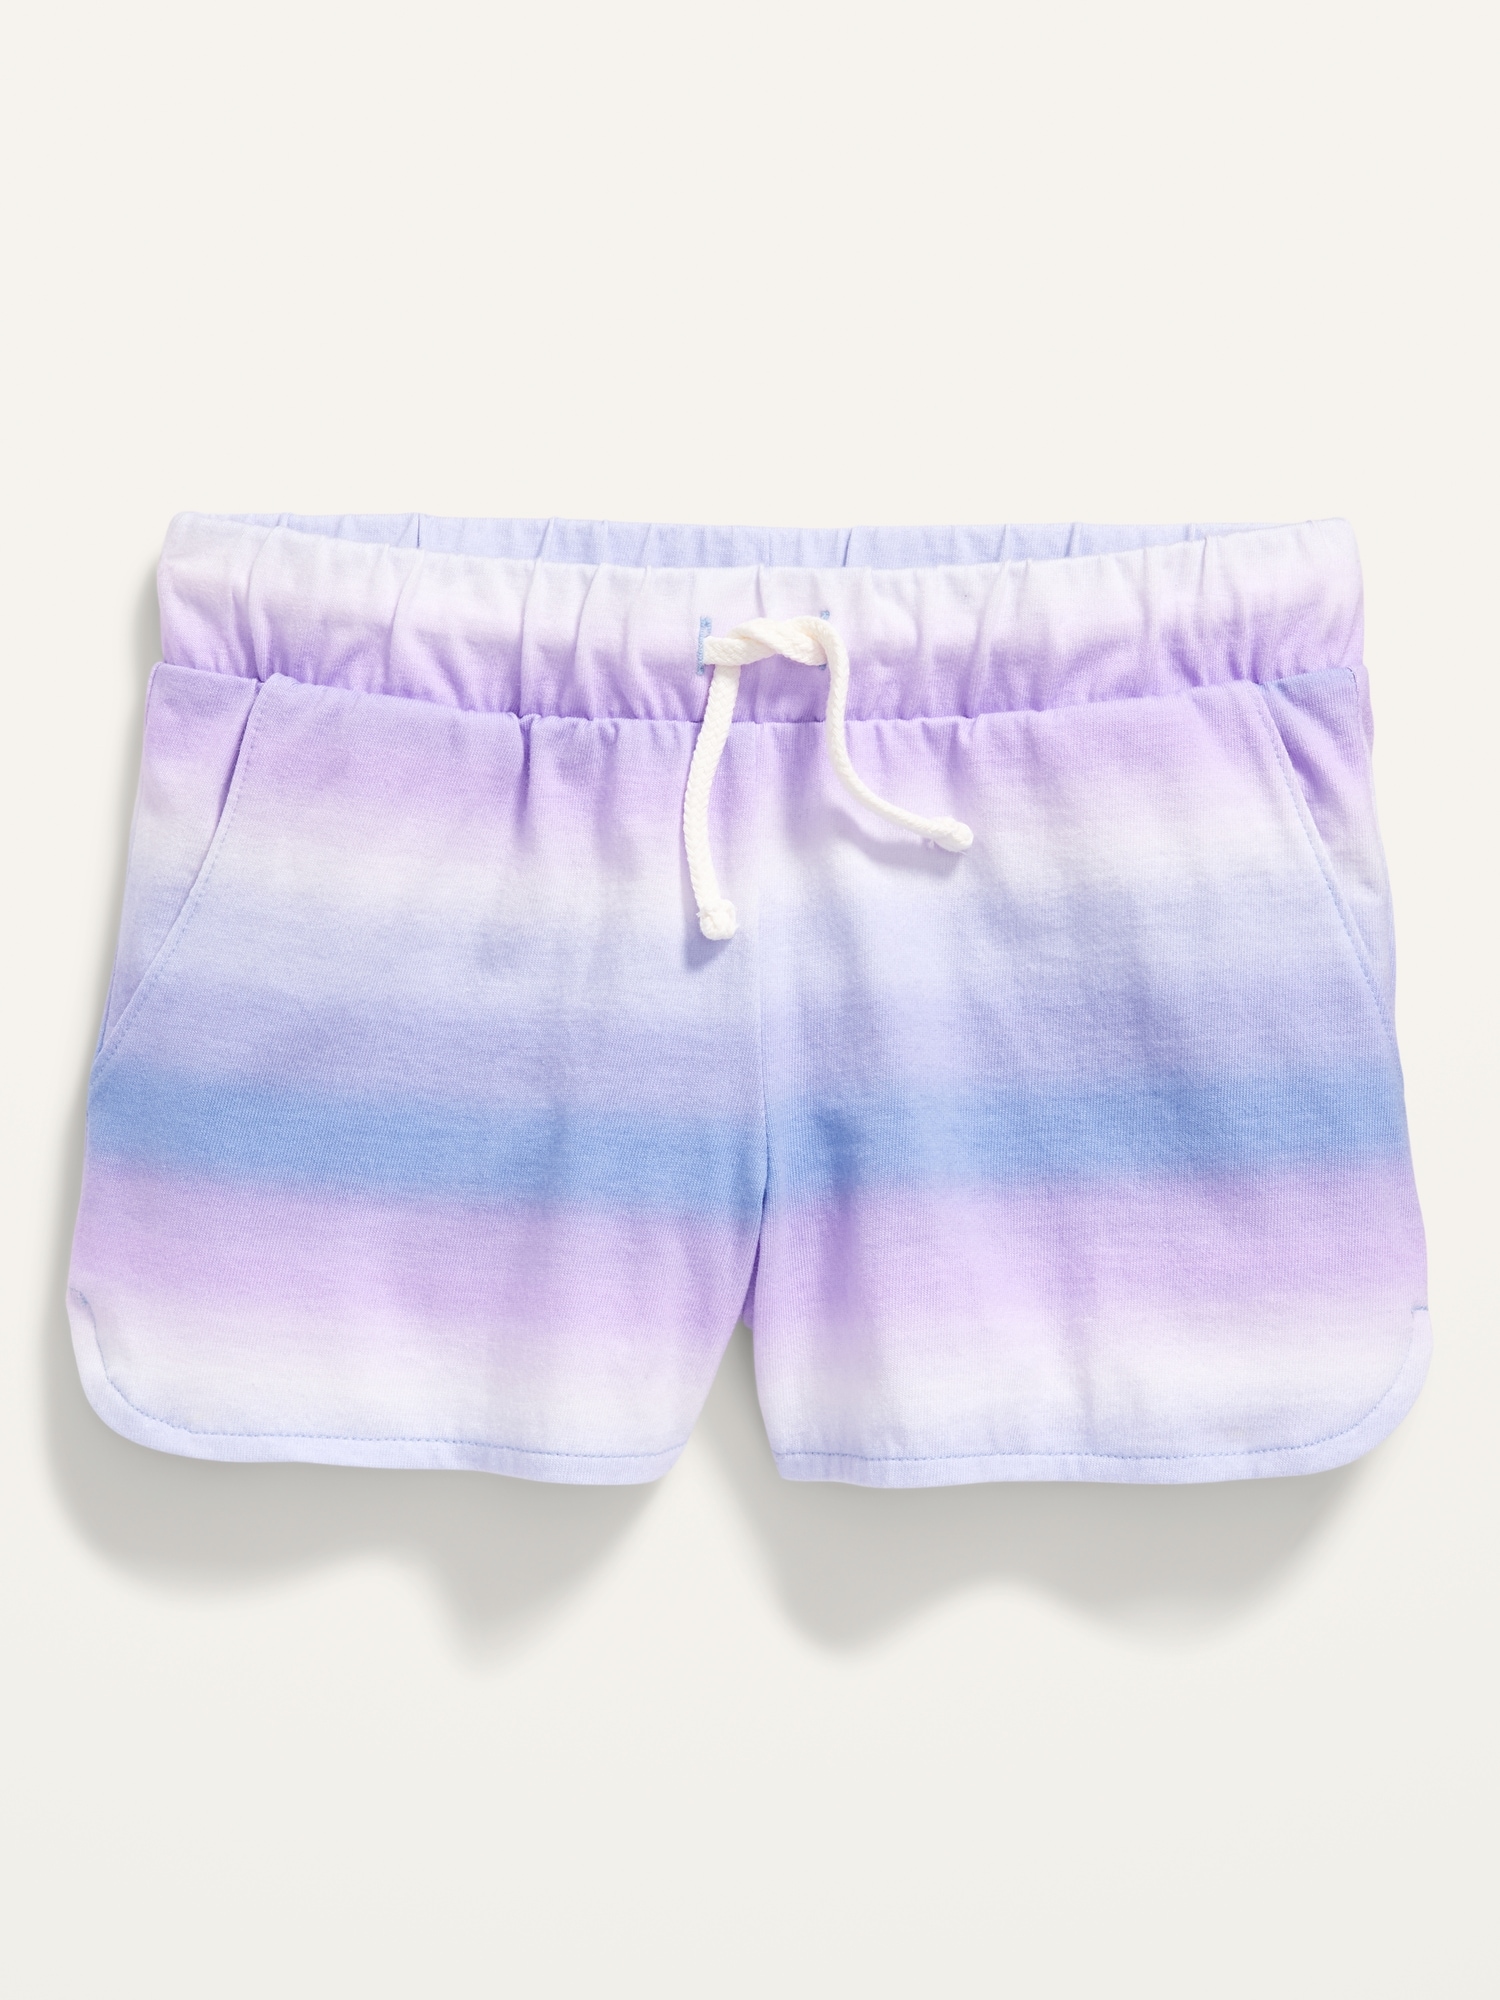 Printed Dolphin-Hem Cheer Shorts for Girls